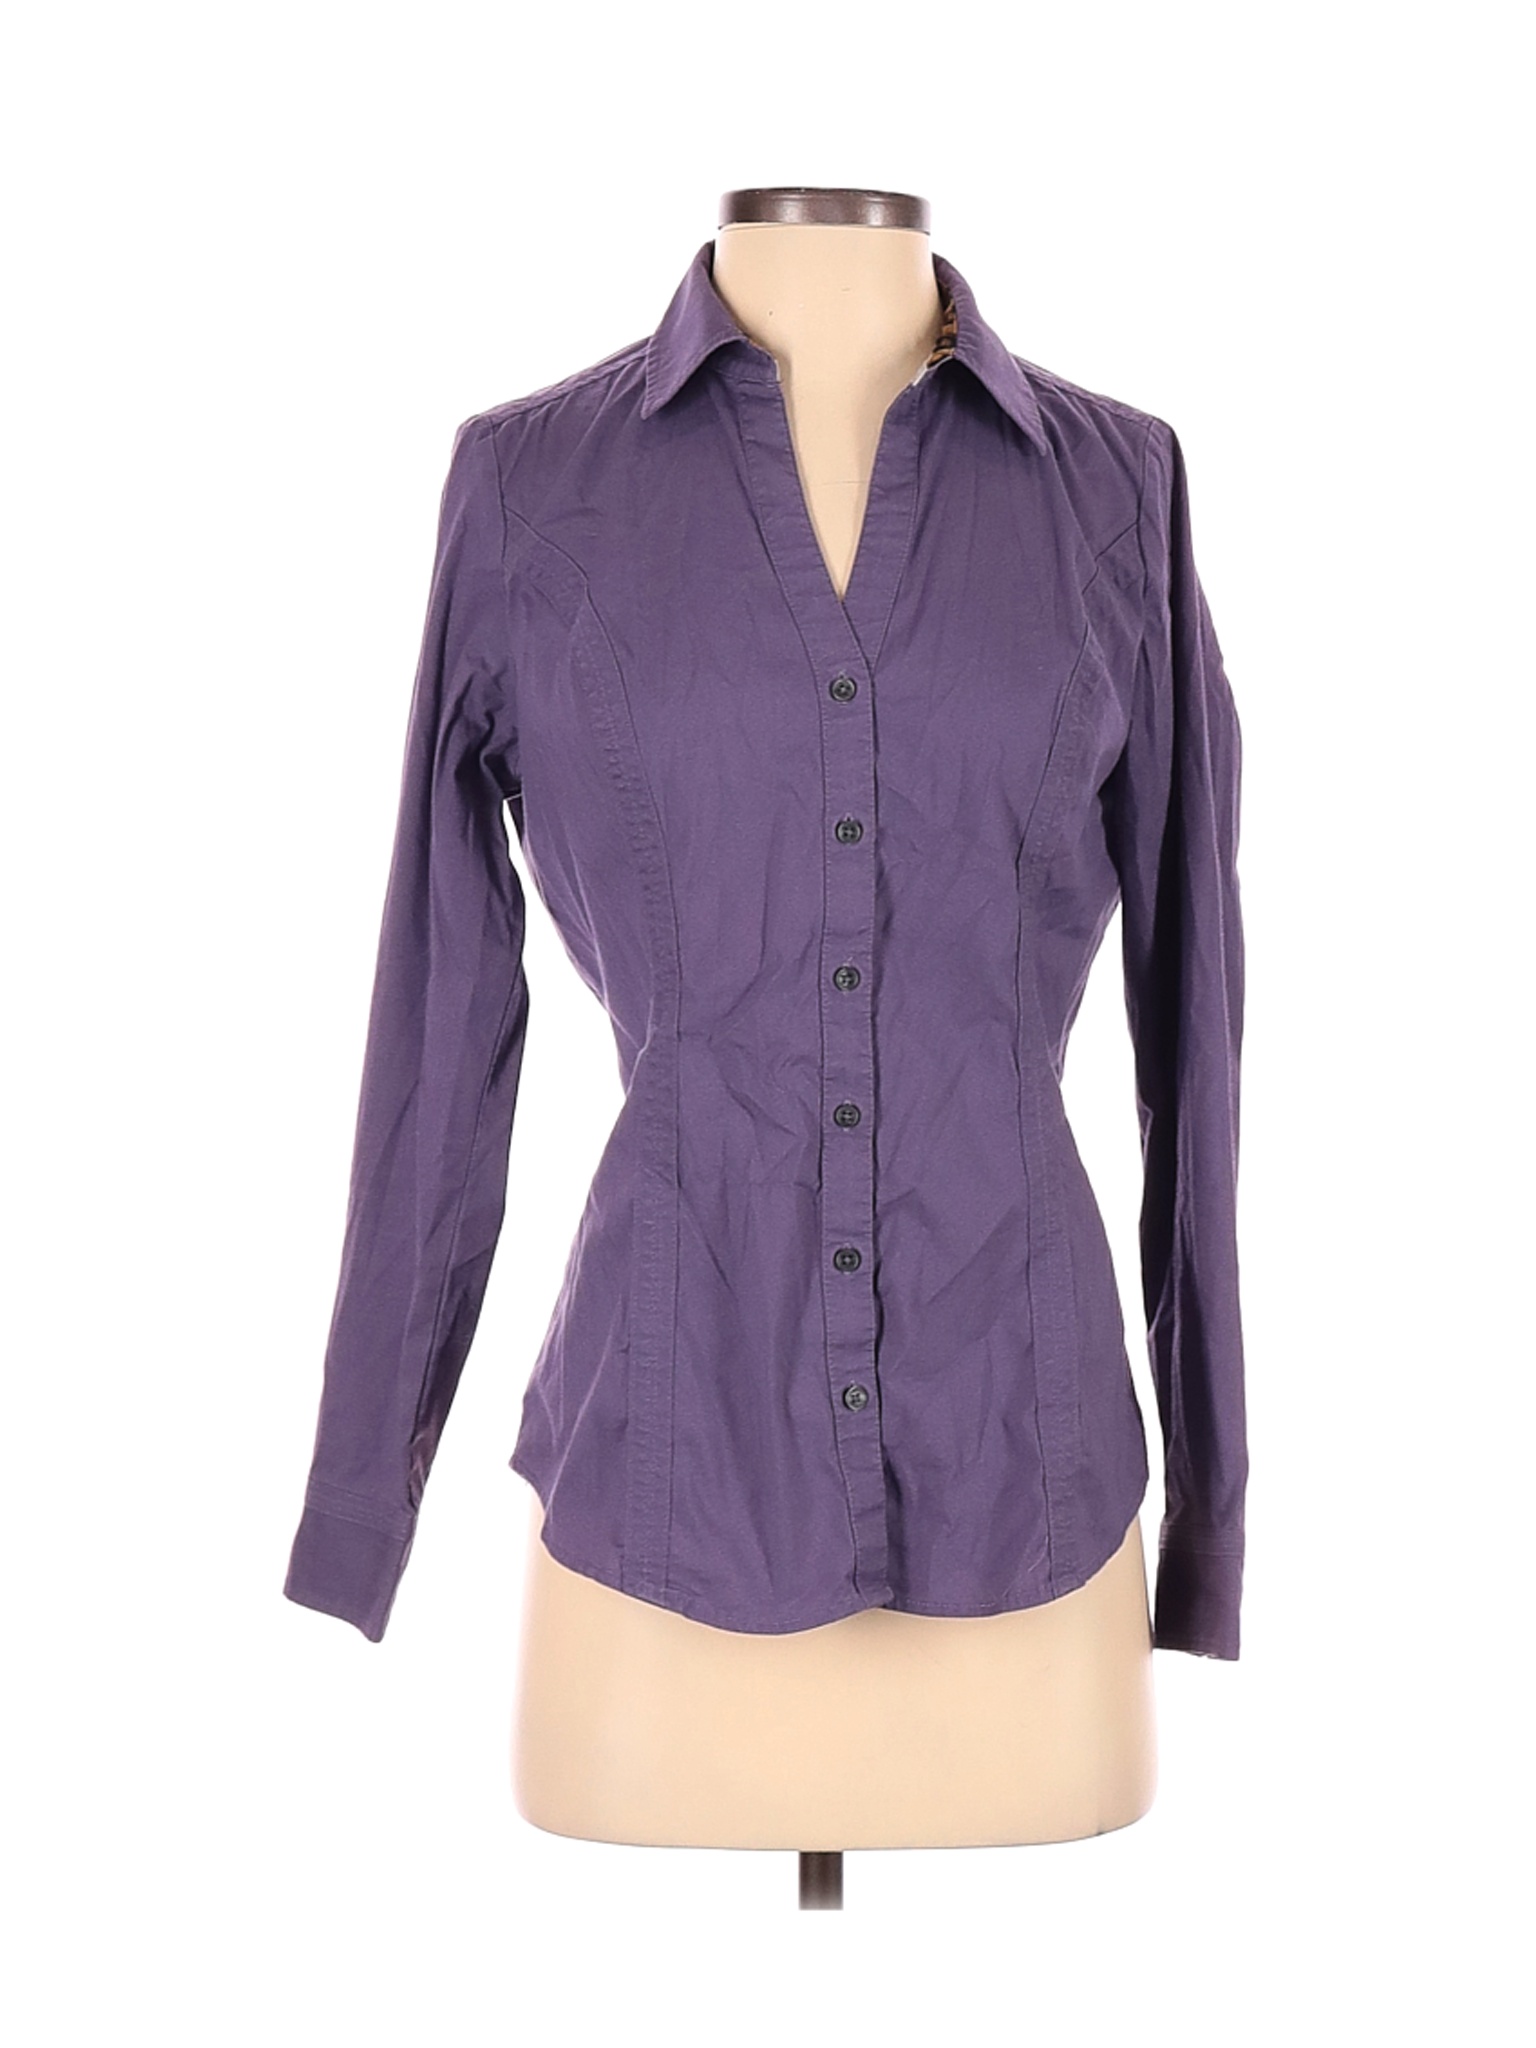 Express Women Purple Long Sleeve Button-Down Shirt S | eBay